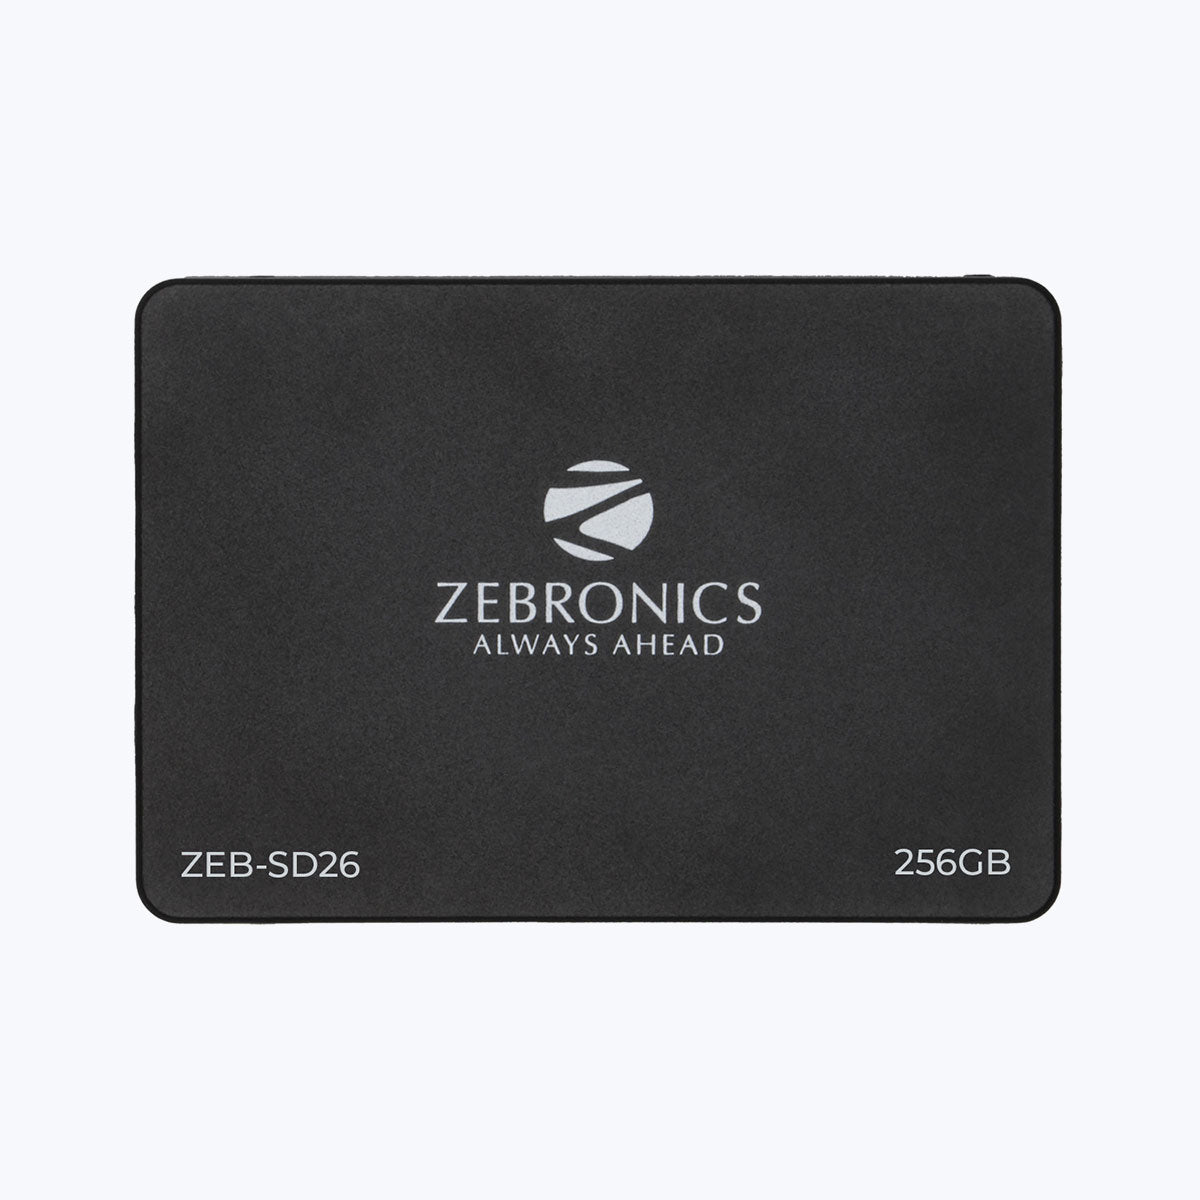 ZEB-SD26 - SSD - Zebronics